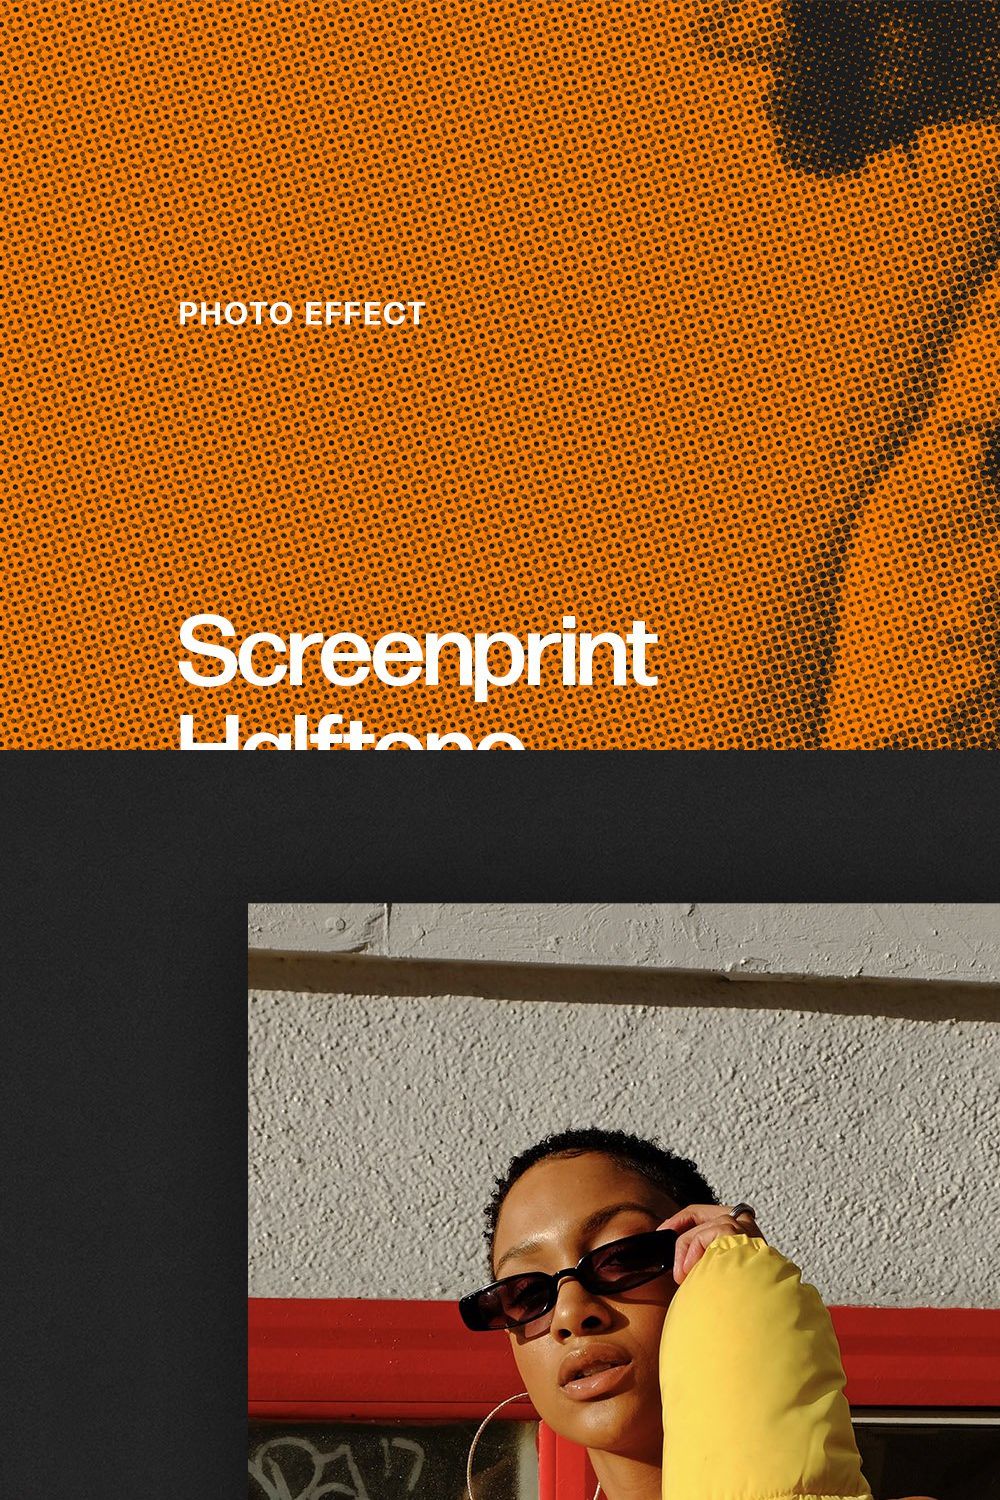 Screenprint Halftone Effect pinterest preview image.